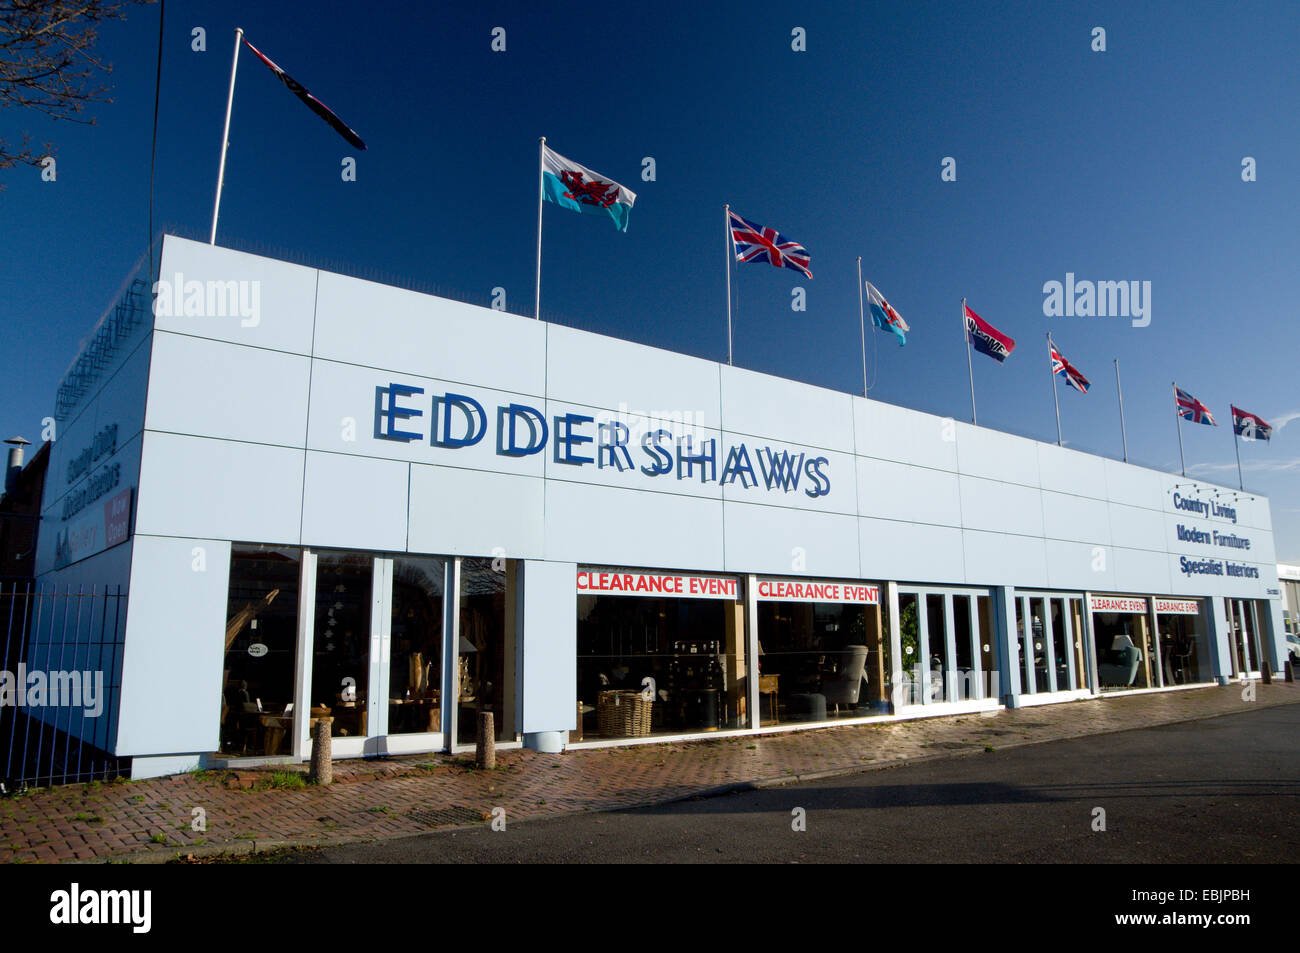 Eddershaws magasin de meubles, Hadfield Road, Cardiff, Pays de Galles, Royaume-Uni. Banque D'Images